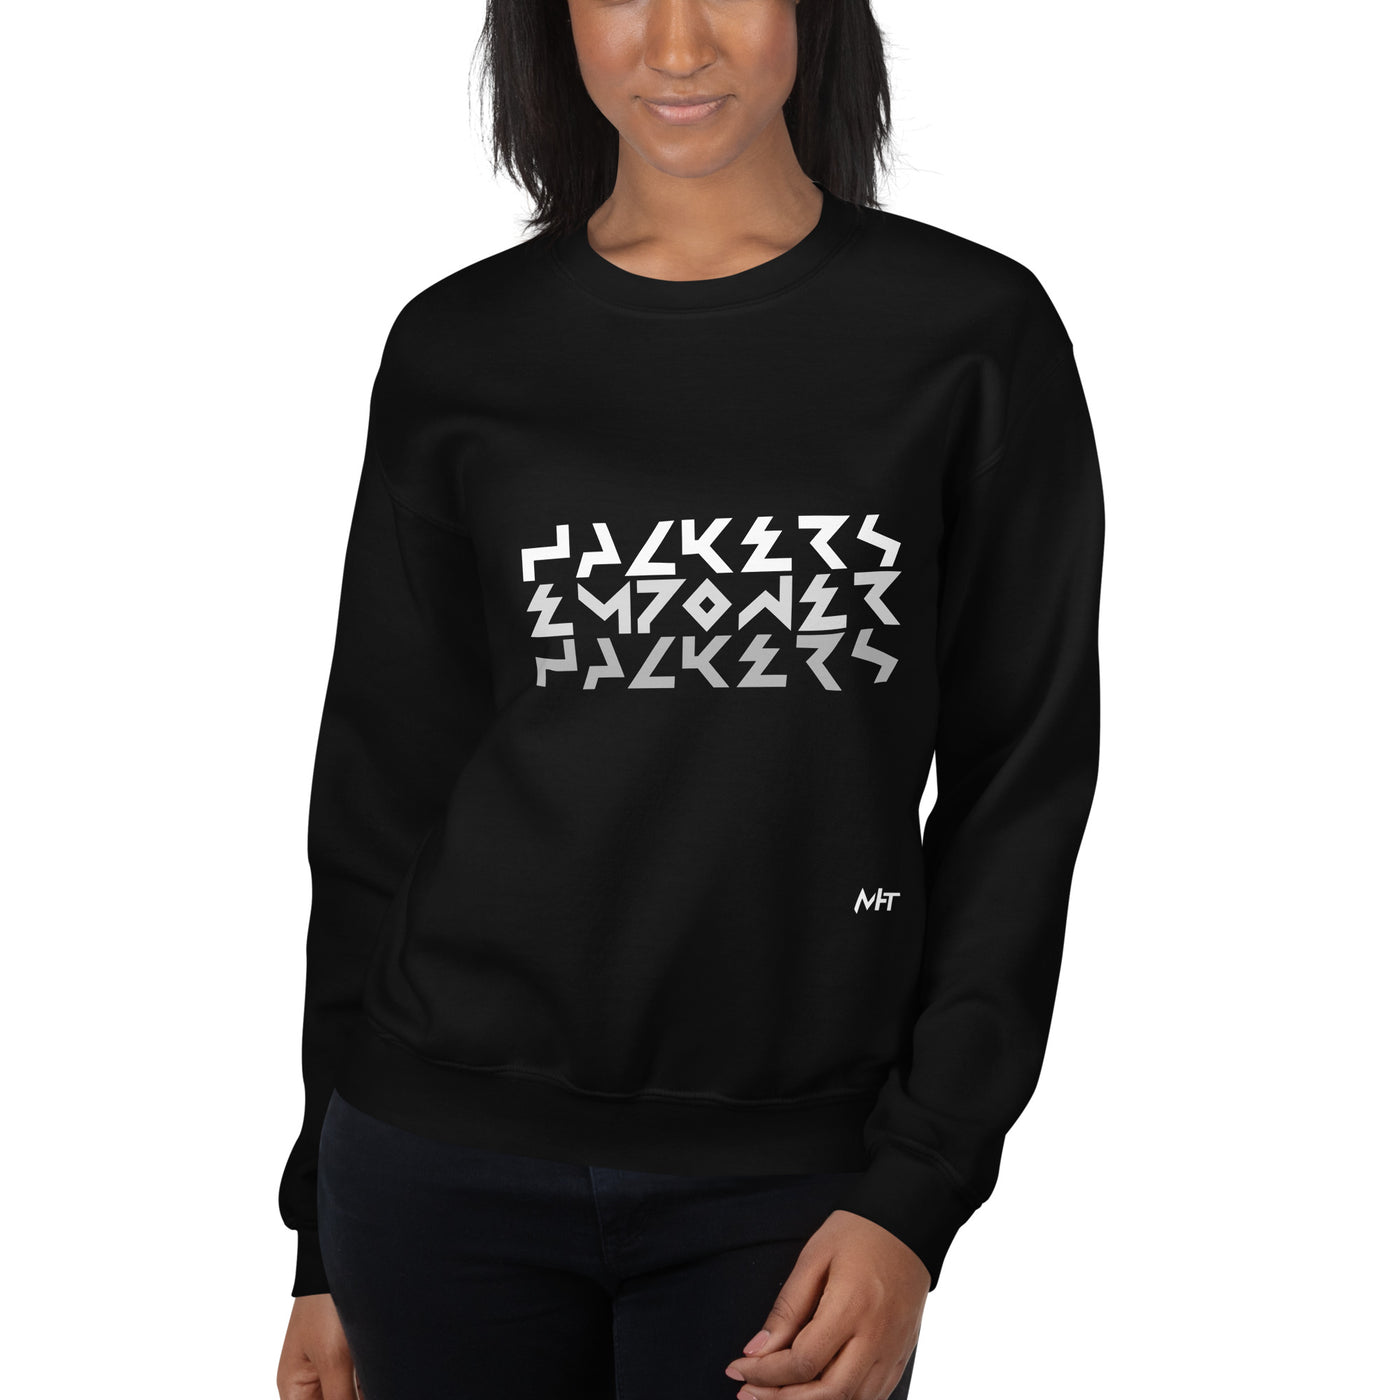 Hackers Empower Hackers V4 - Unisex Sweatshirt